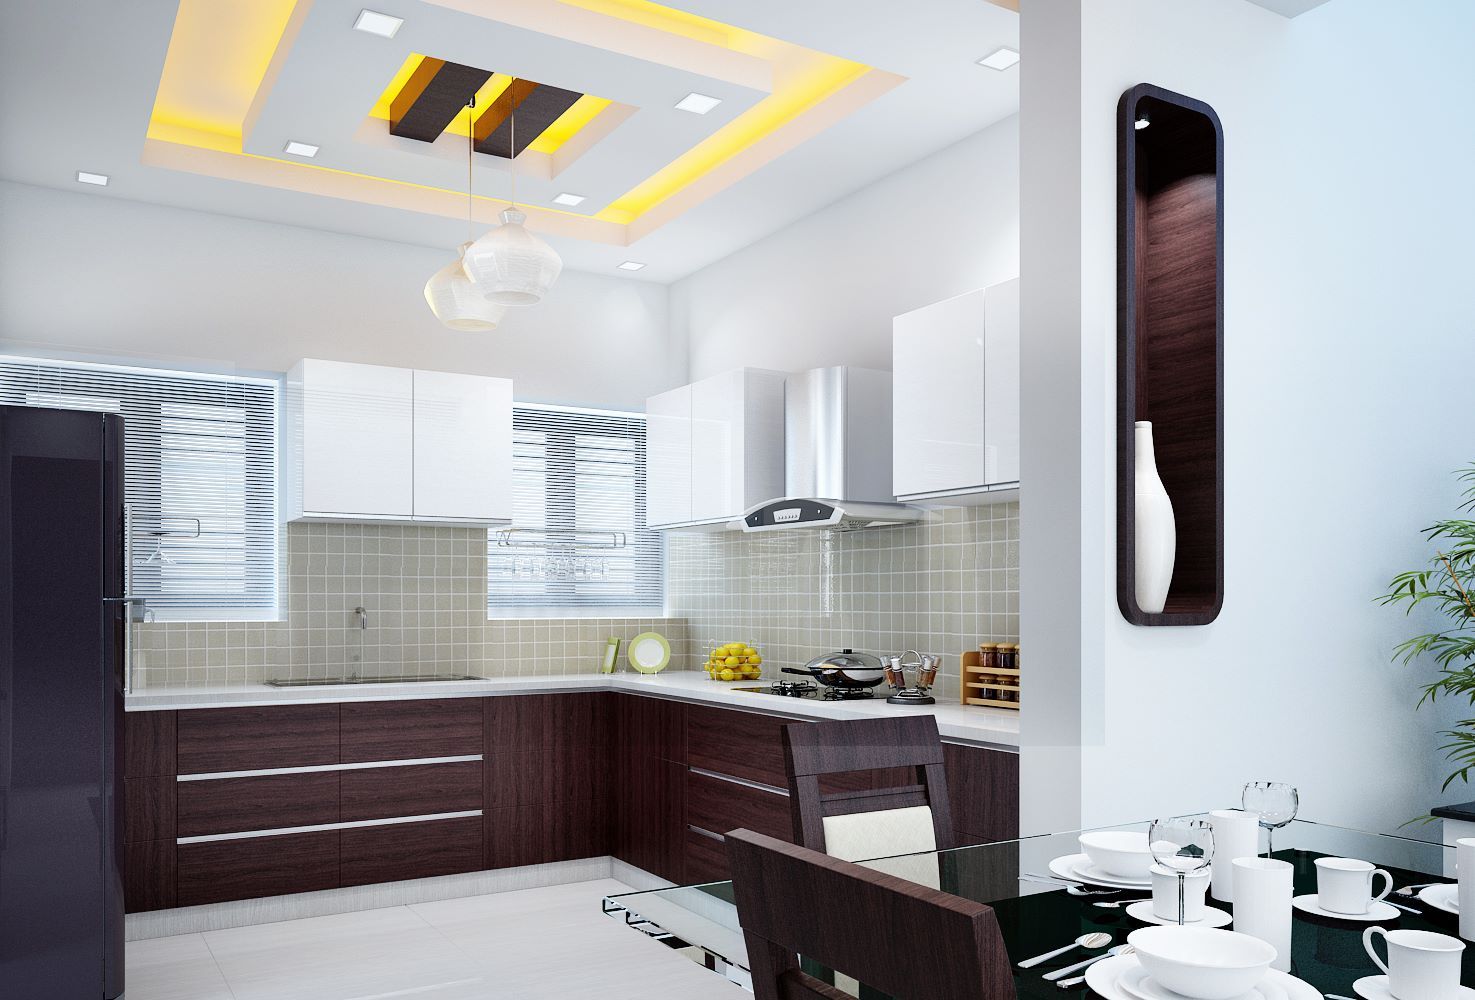 Kitchen Designs, Infra I Nova Pvt.Ltd Infra I Nova Pvt.Ltd Cocinas modernas: Ideas, imágenes y decoración